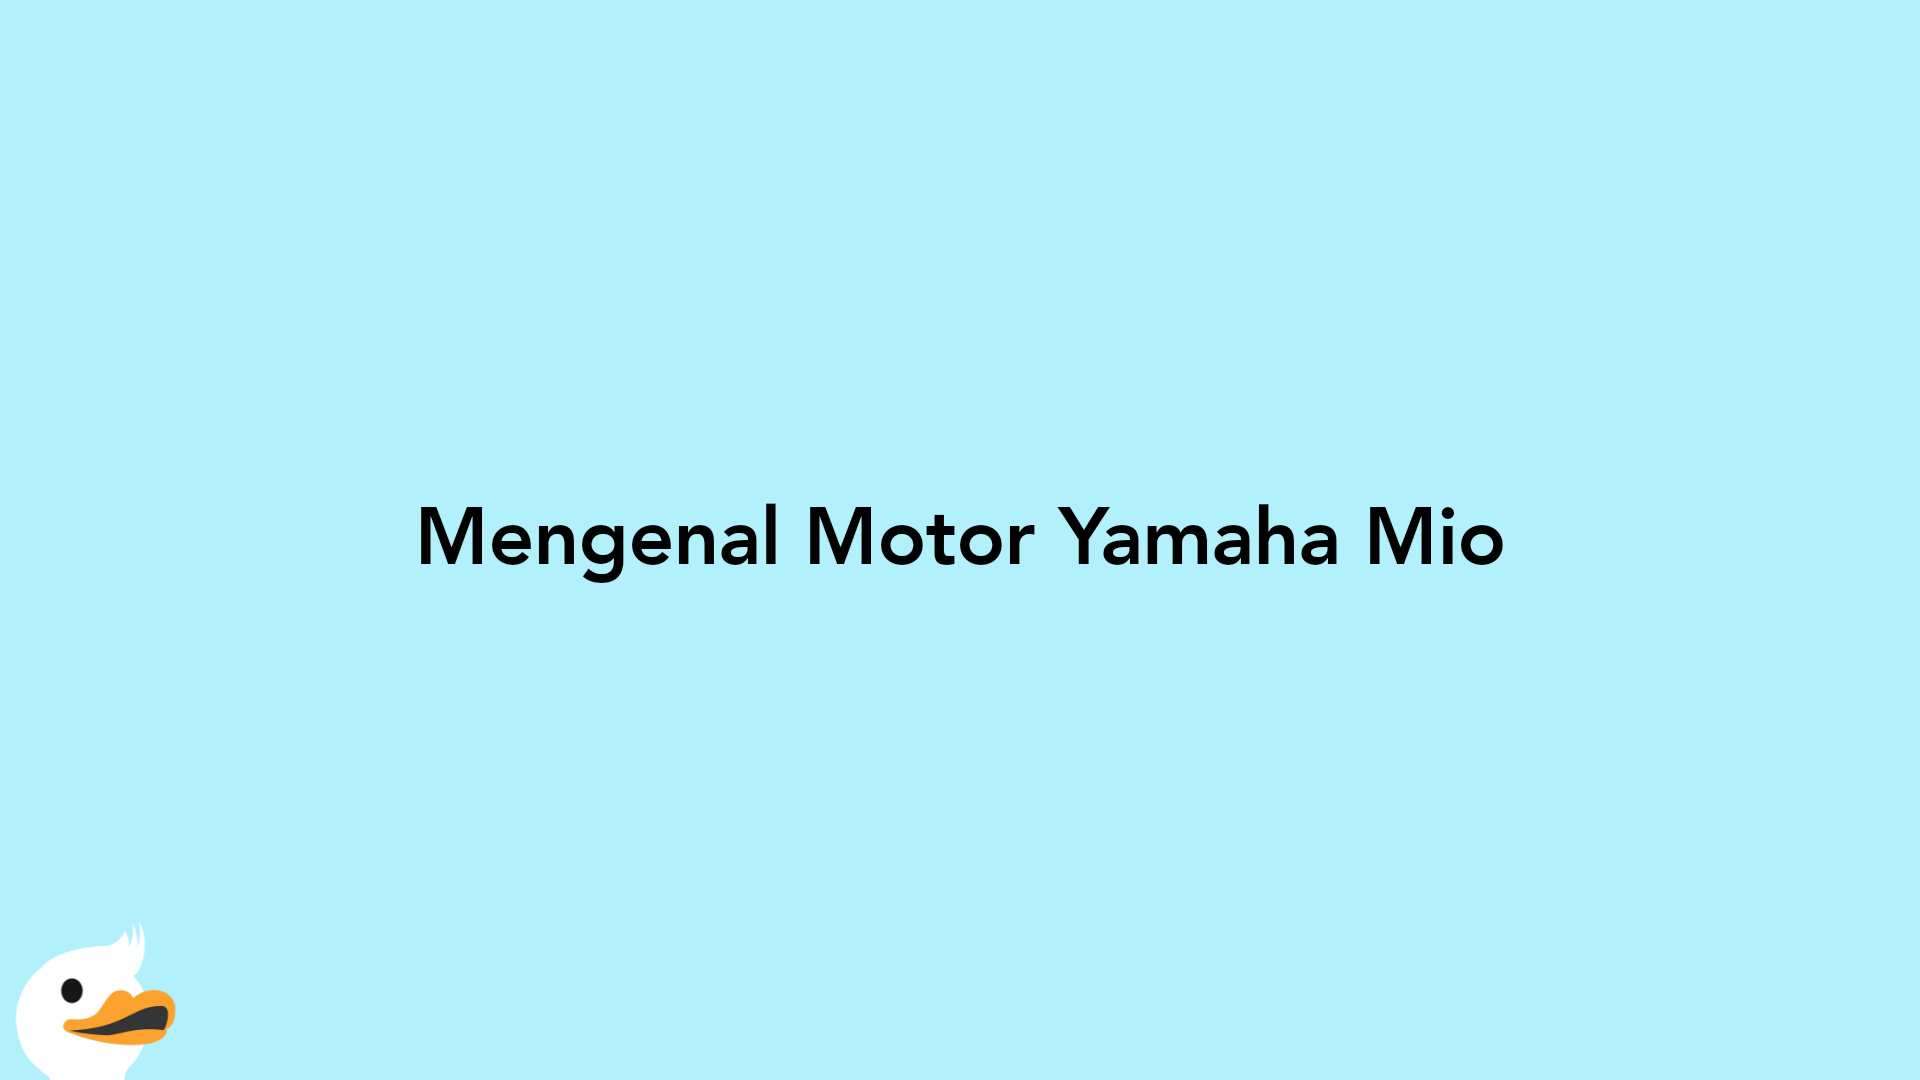 Mengenal Motor Yamaha Mio